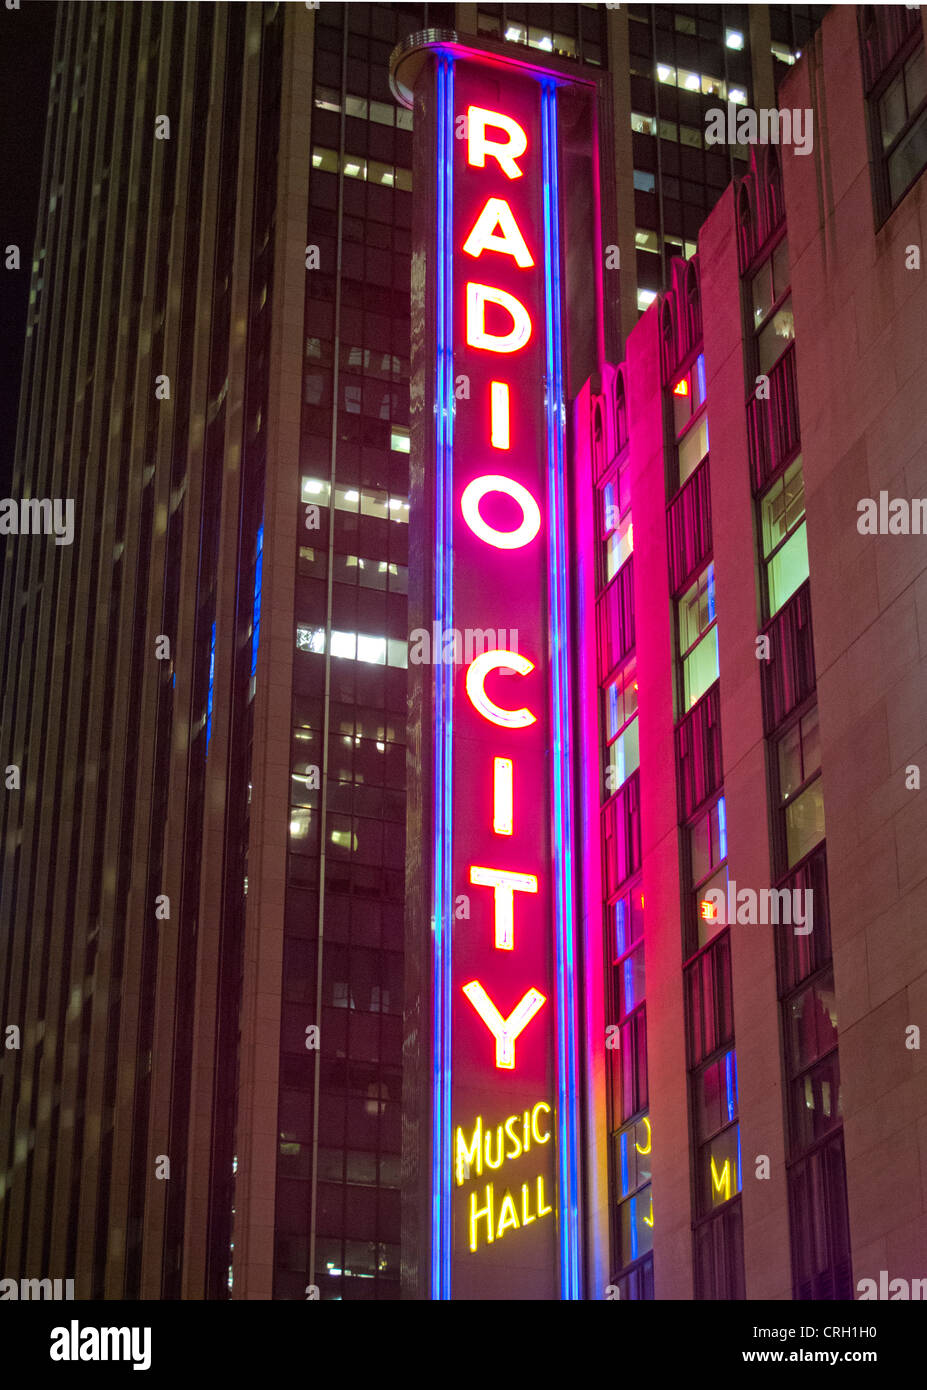 Radio city music hall neon sign Stock Photo - Alamy